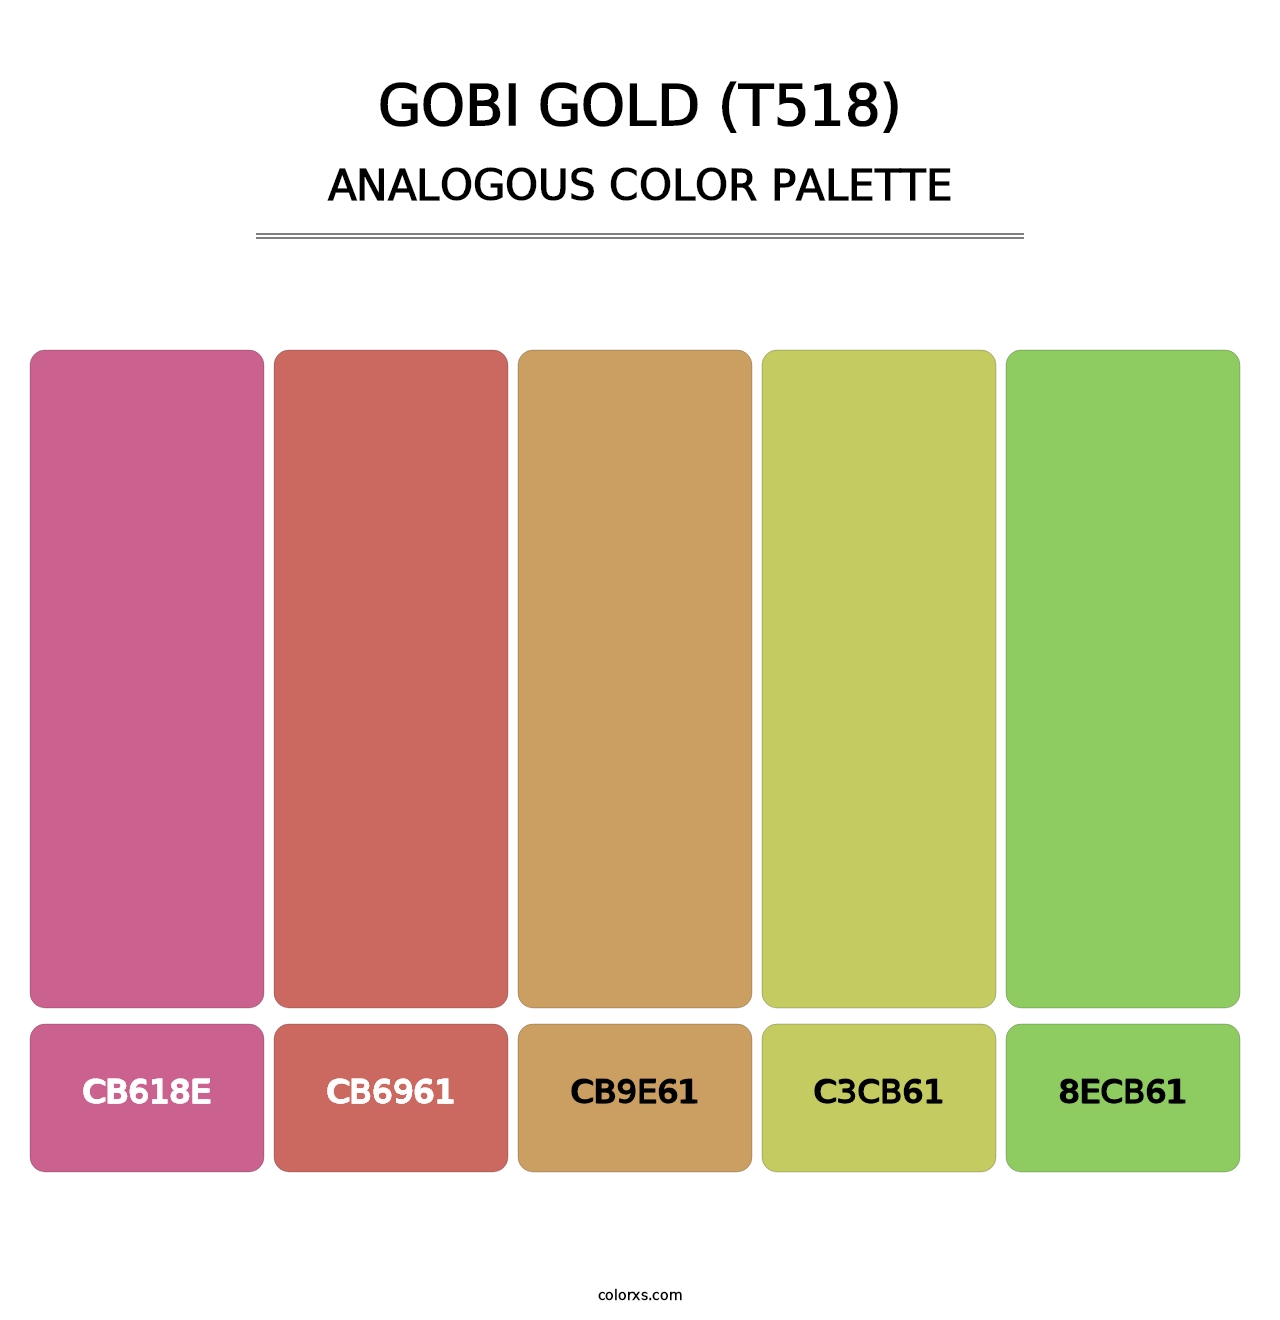 Gobi Gold (T518) - Analogous Color Palette